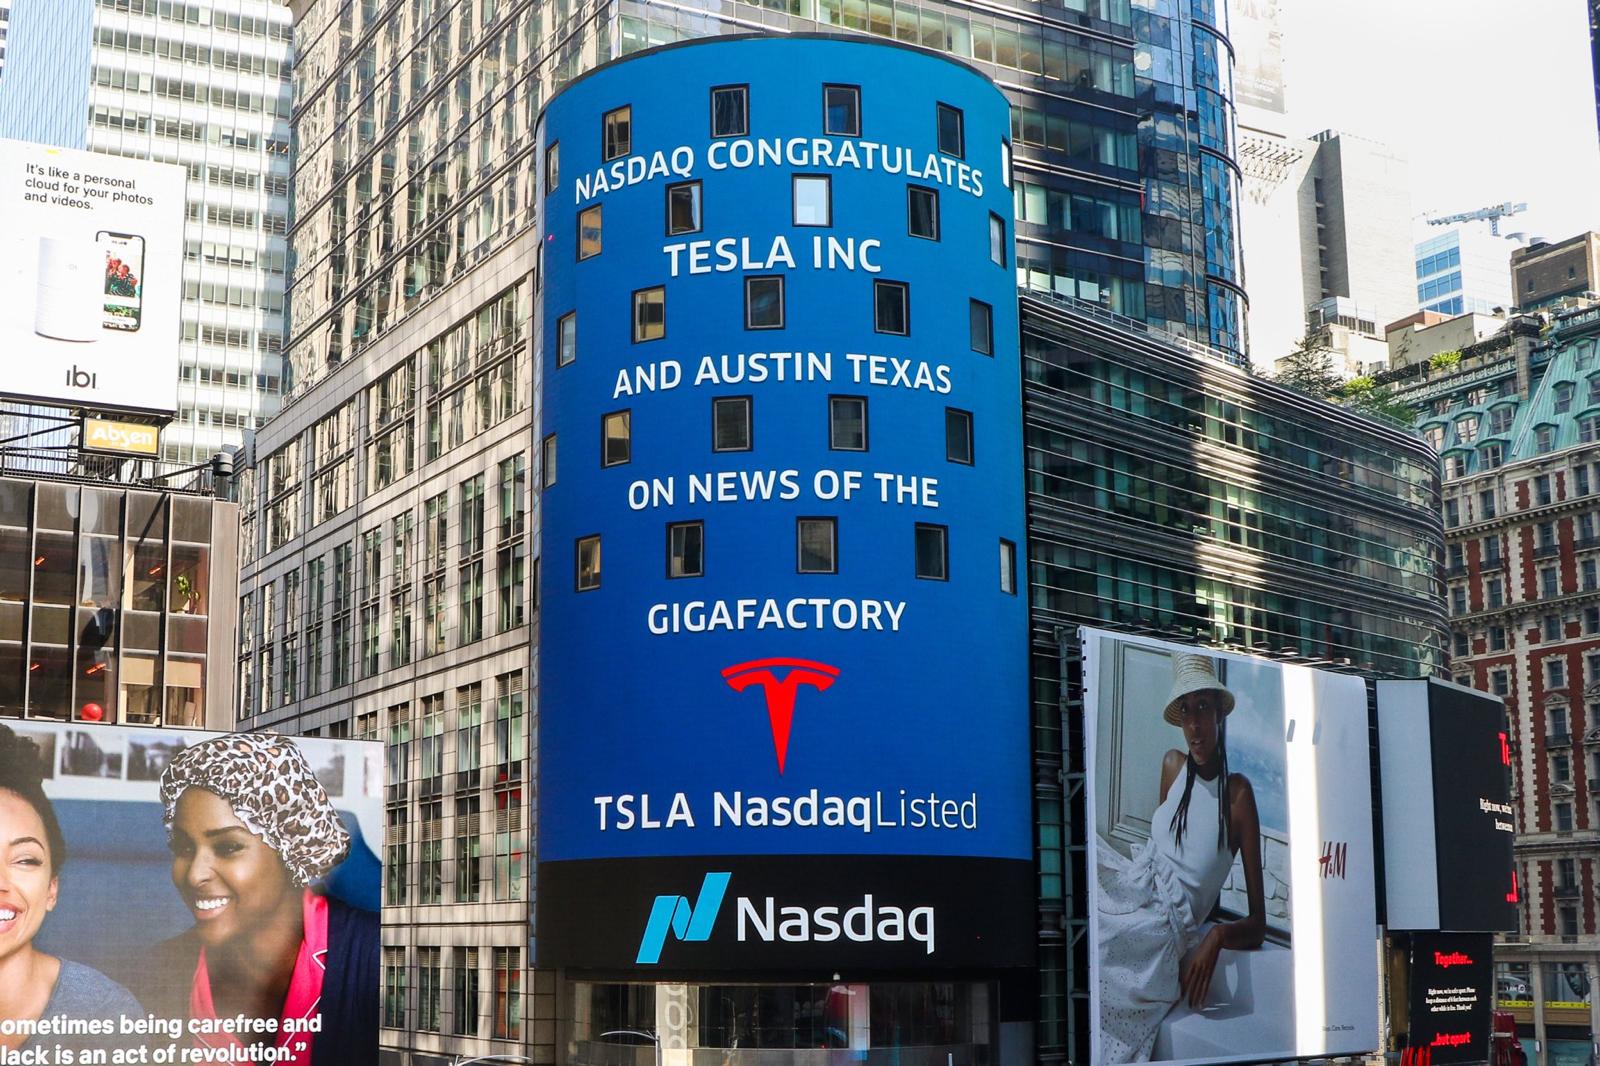 NASDAQ Congratulates Tesla and Austin Texas in Times Square on New Gigafactory